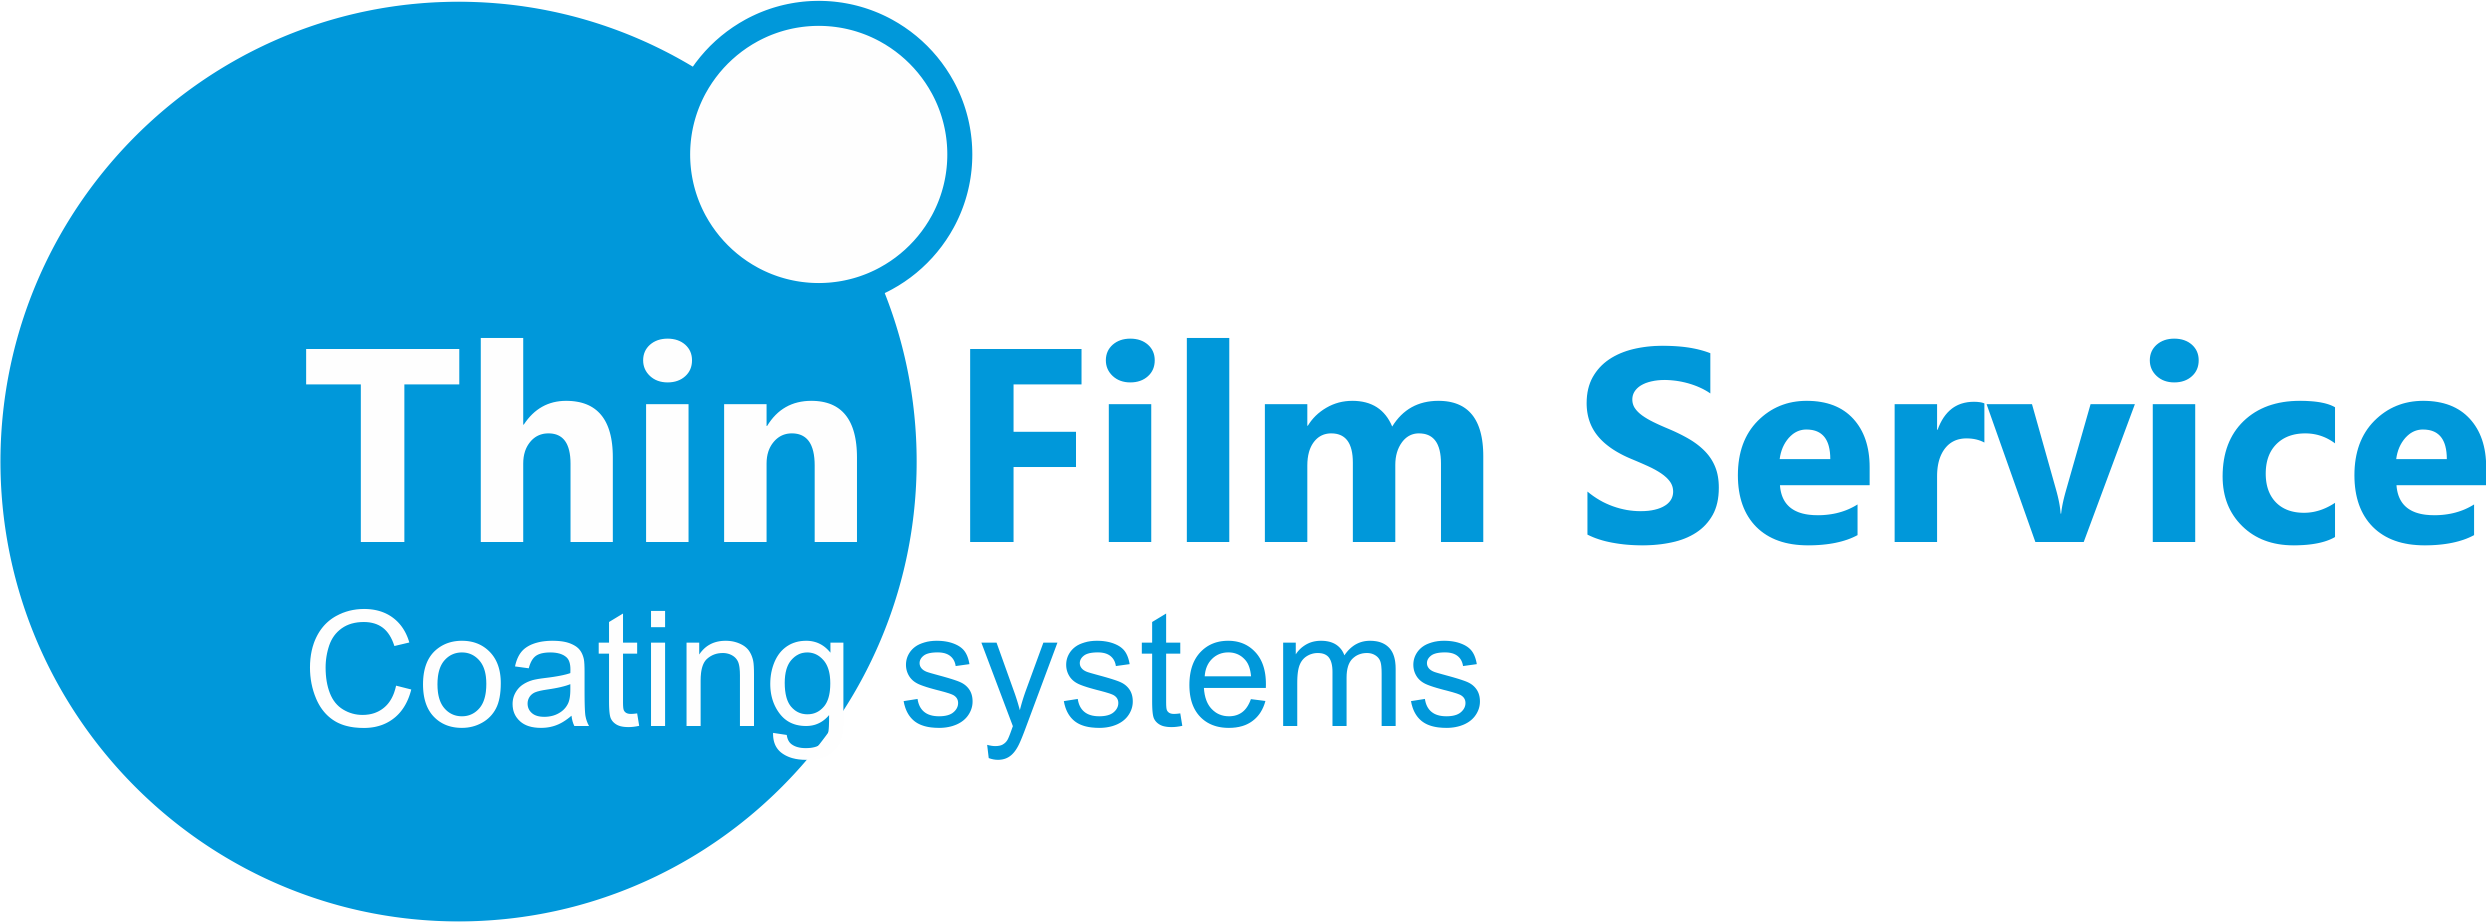 Thin Film Service